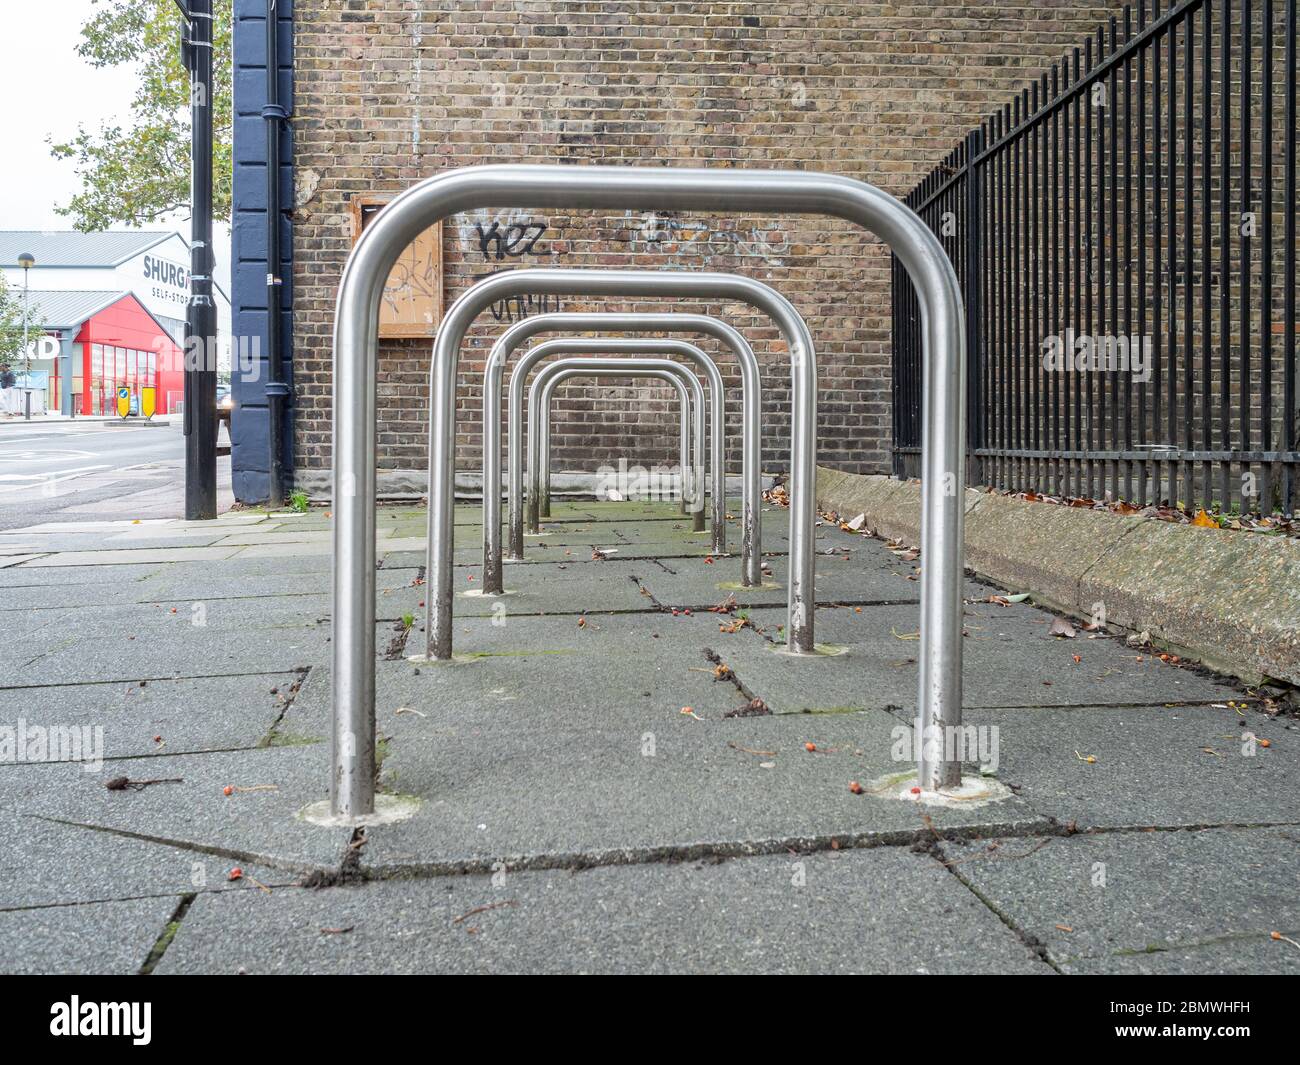 Row of empty Sheffield stand bike racks on the pavement Stock Photo